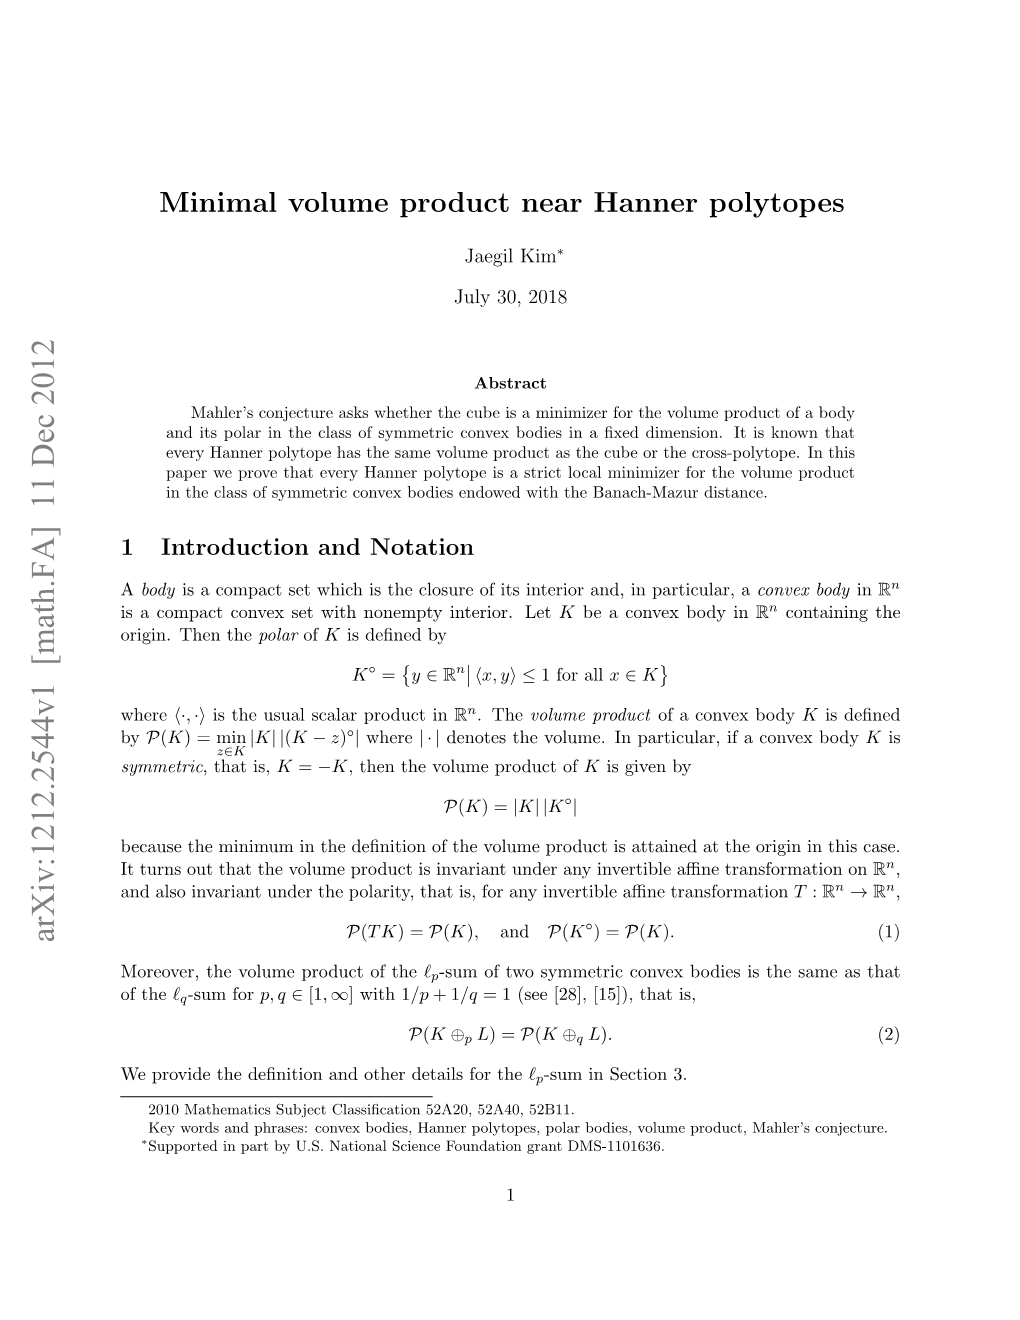 Minimal Volume Product Near Hanner Polytopes